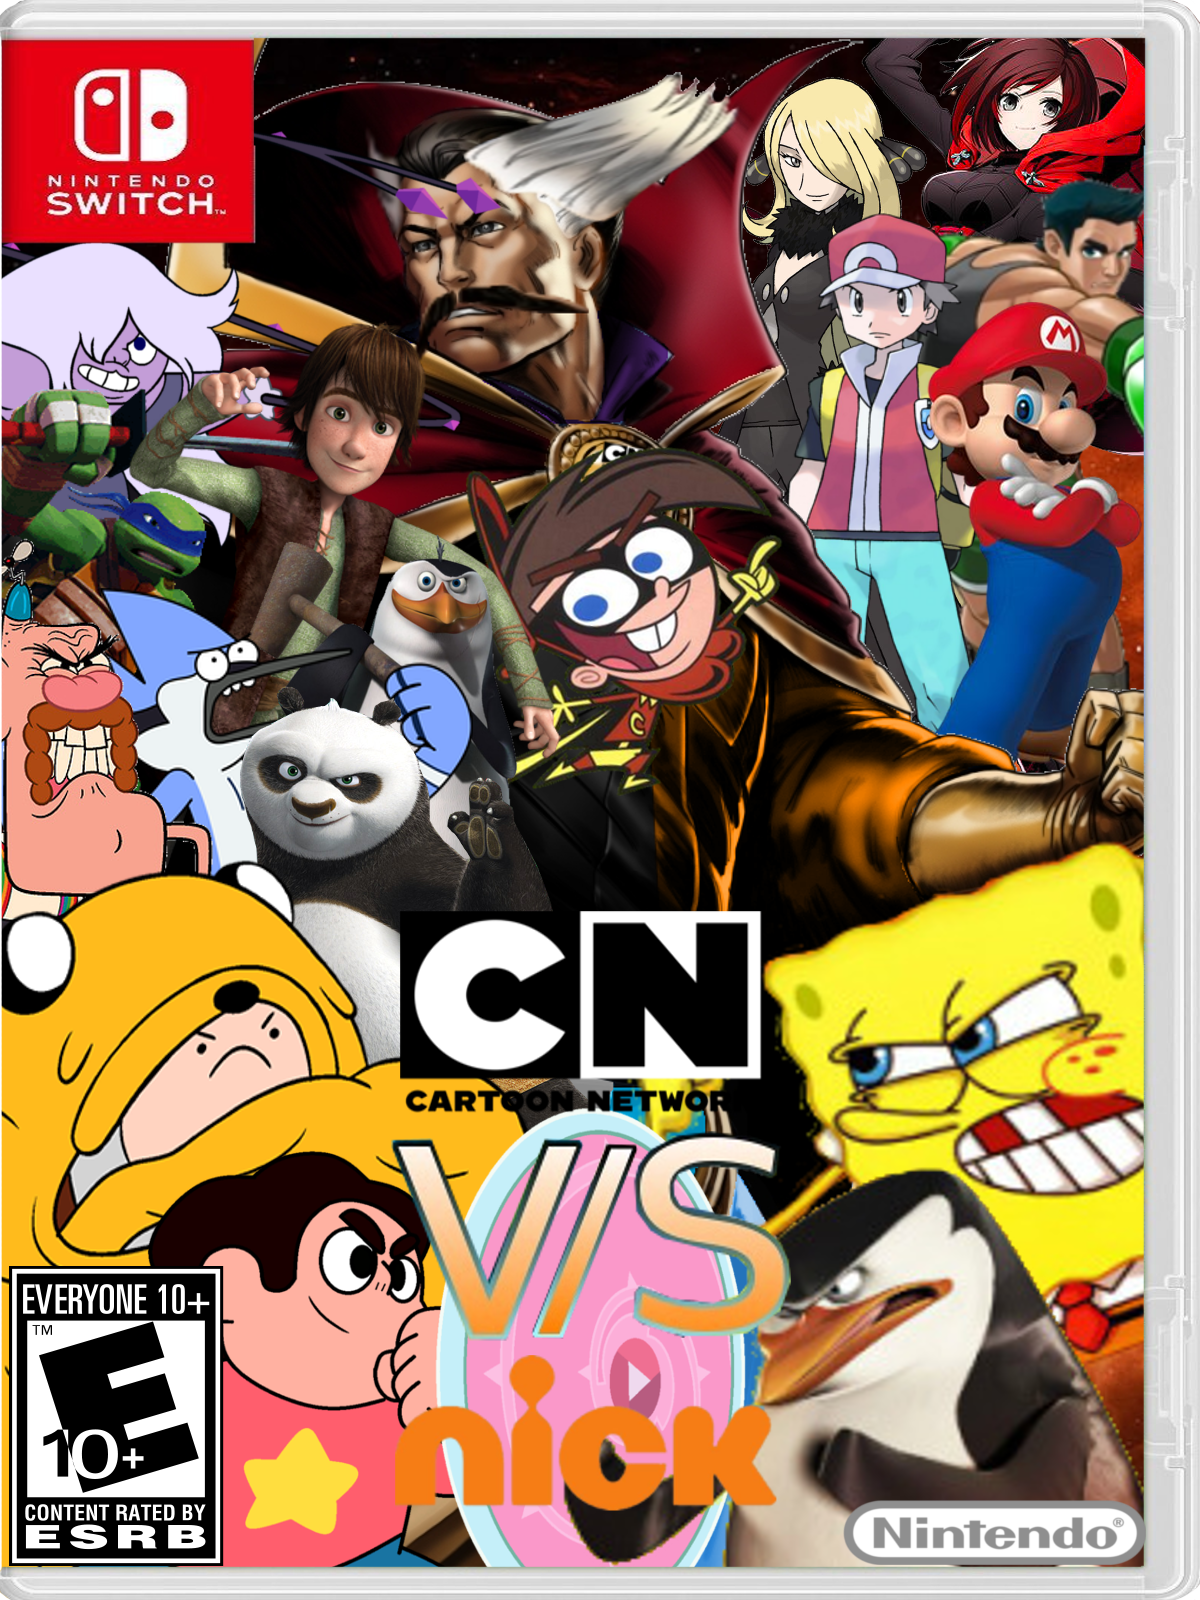 Cartoon Network vs Nickelodeon | Game Ideas Wiki | FANDOM powered by Wikia